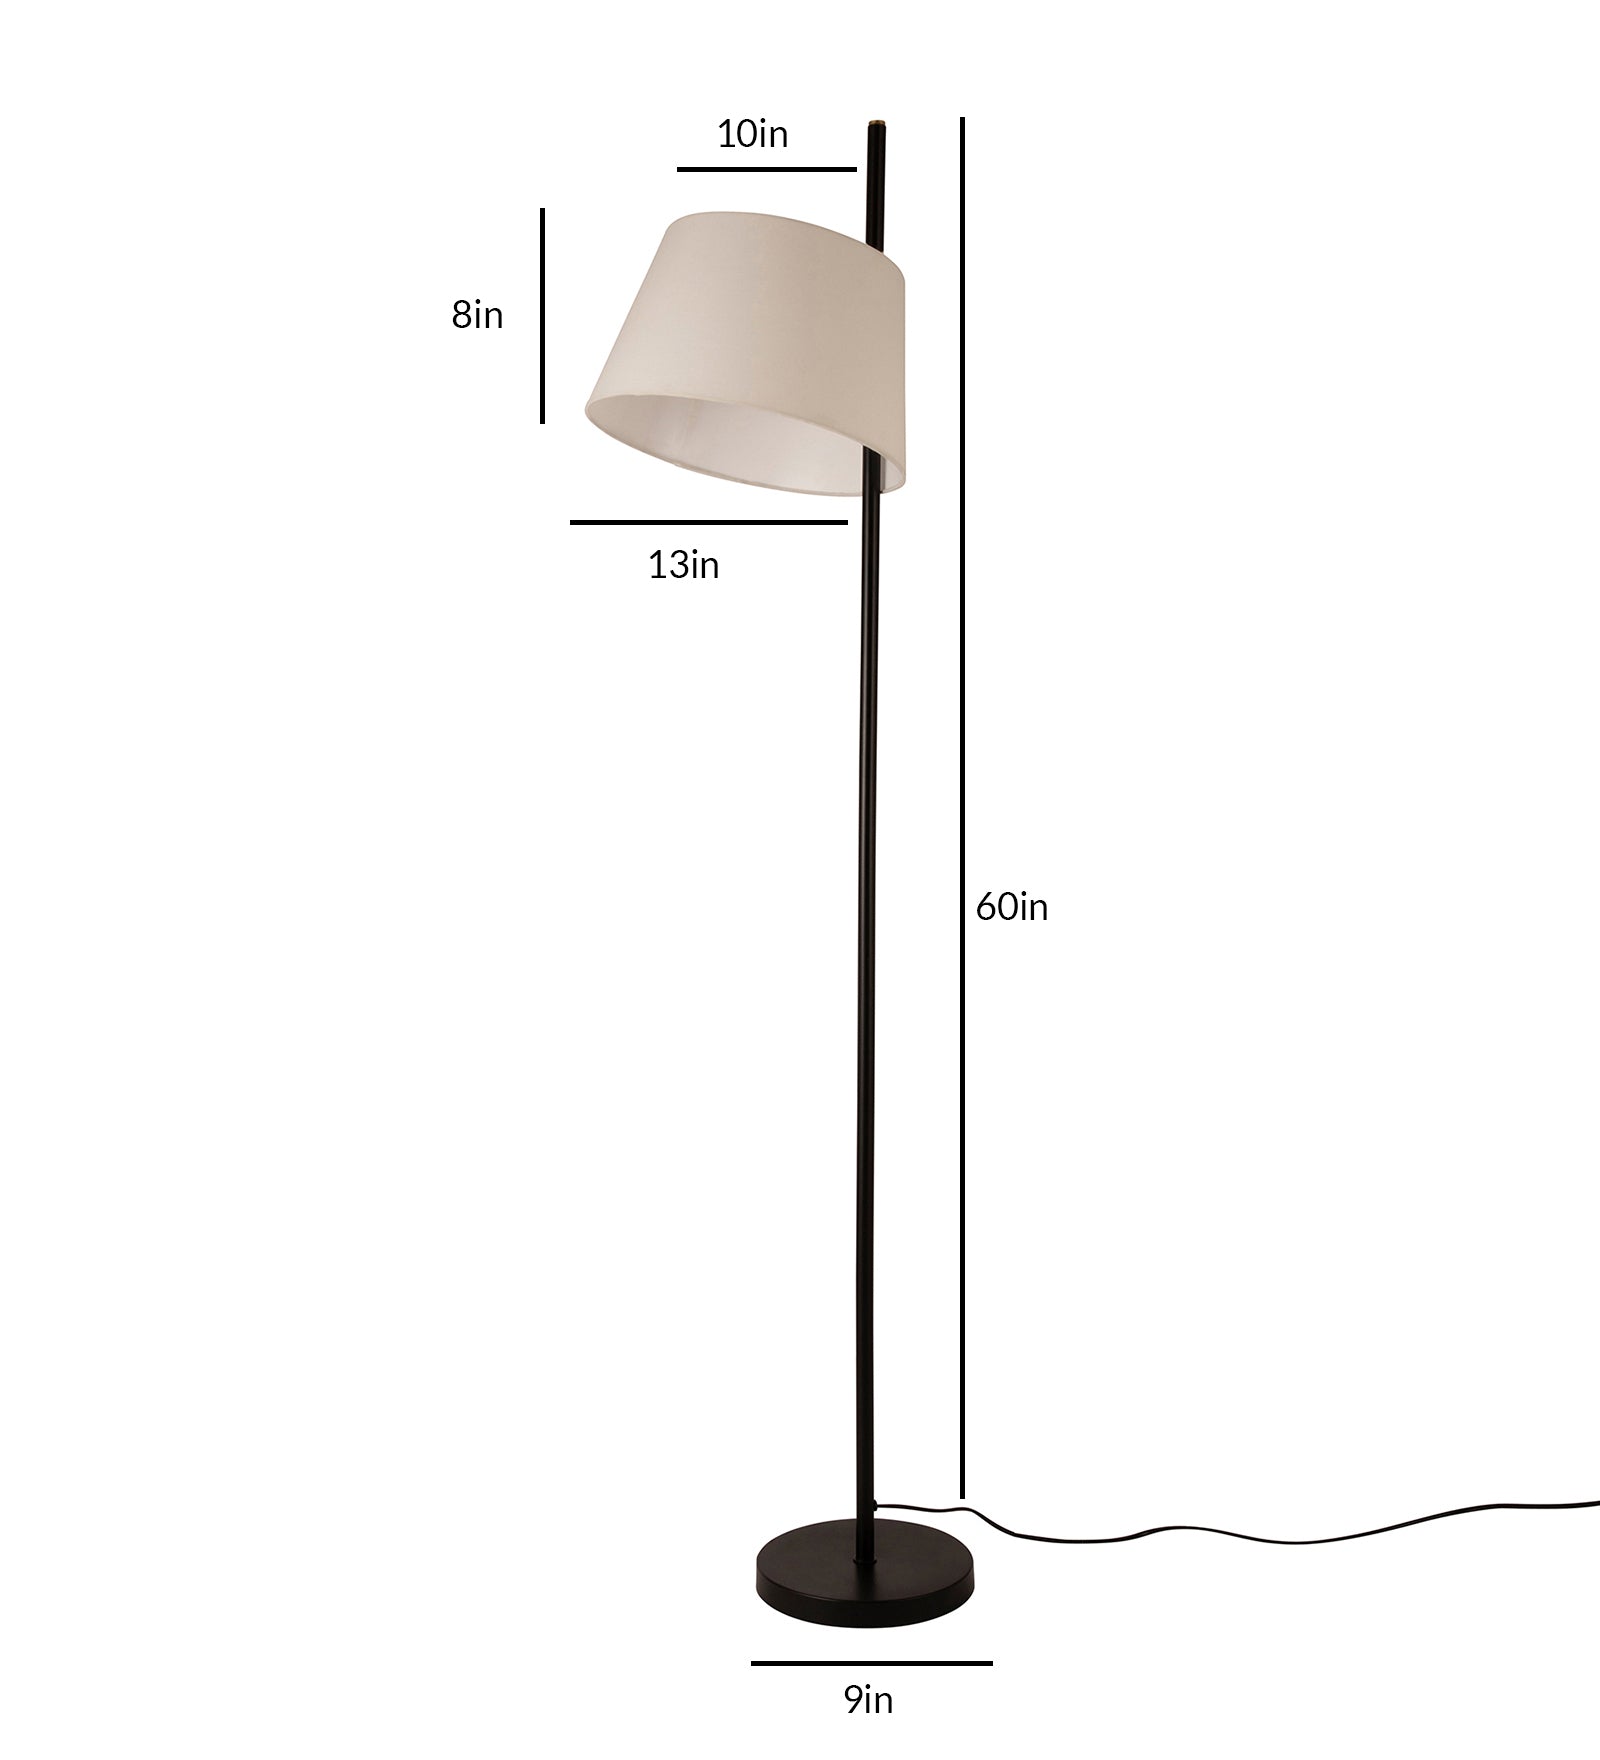 Nordic White Shade Floor Lamp